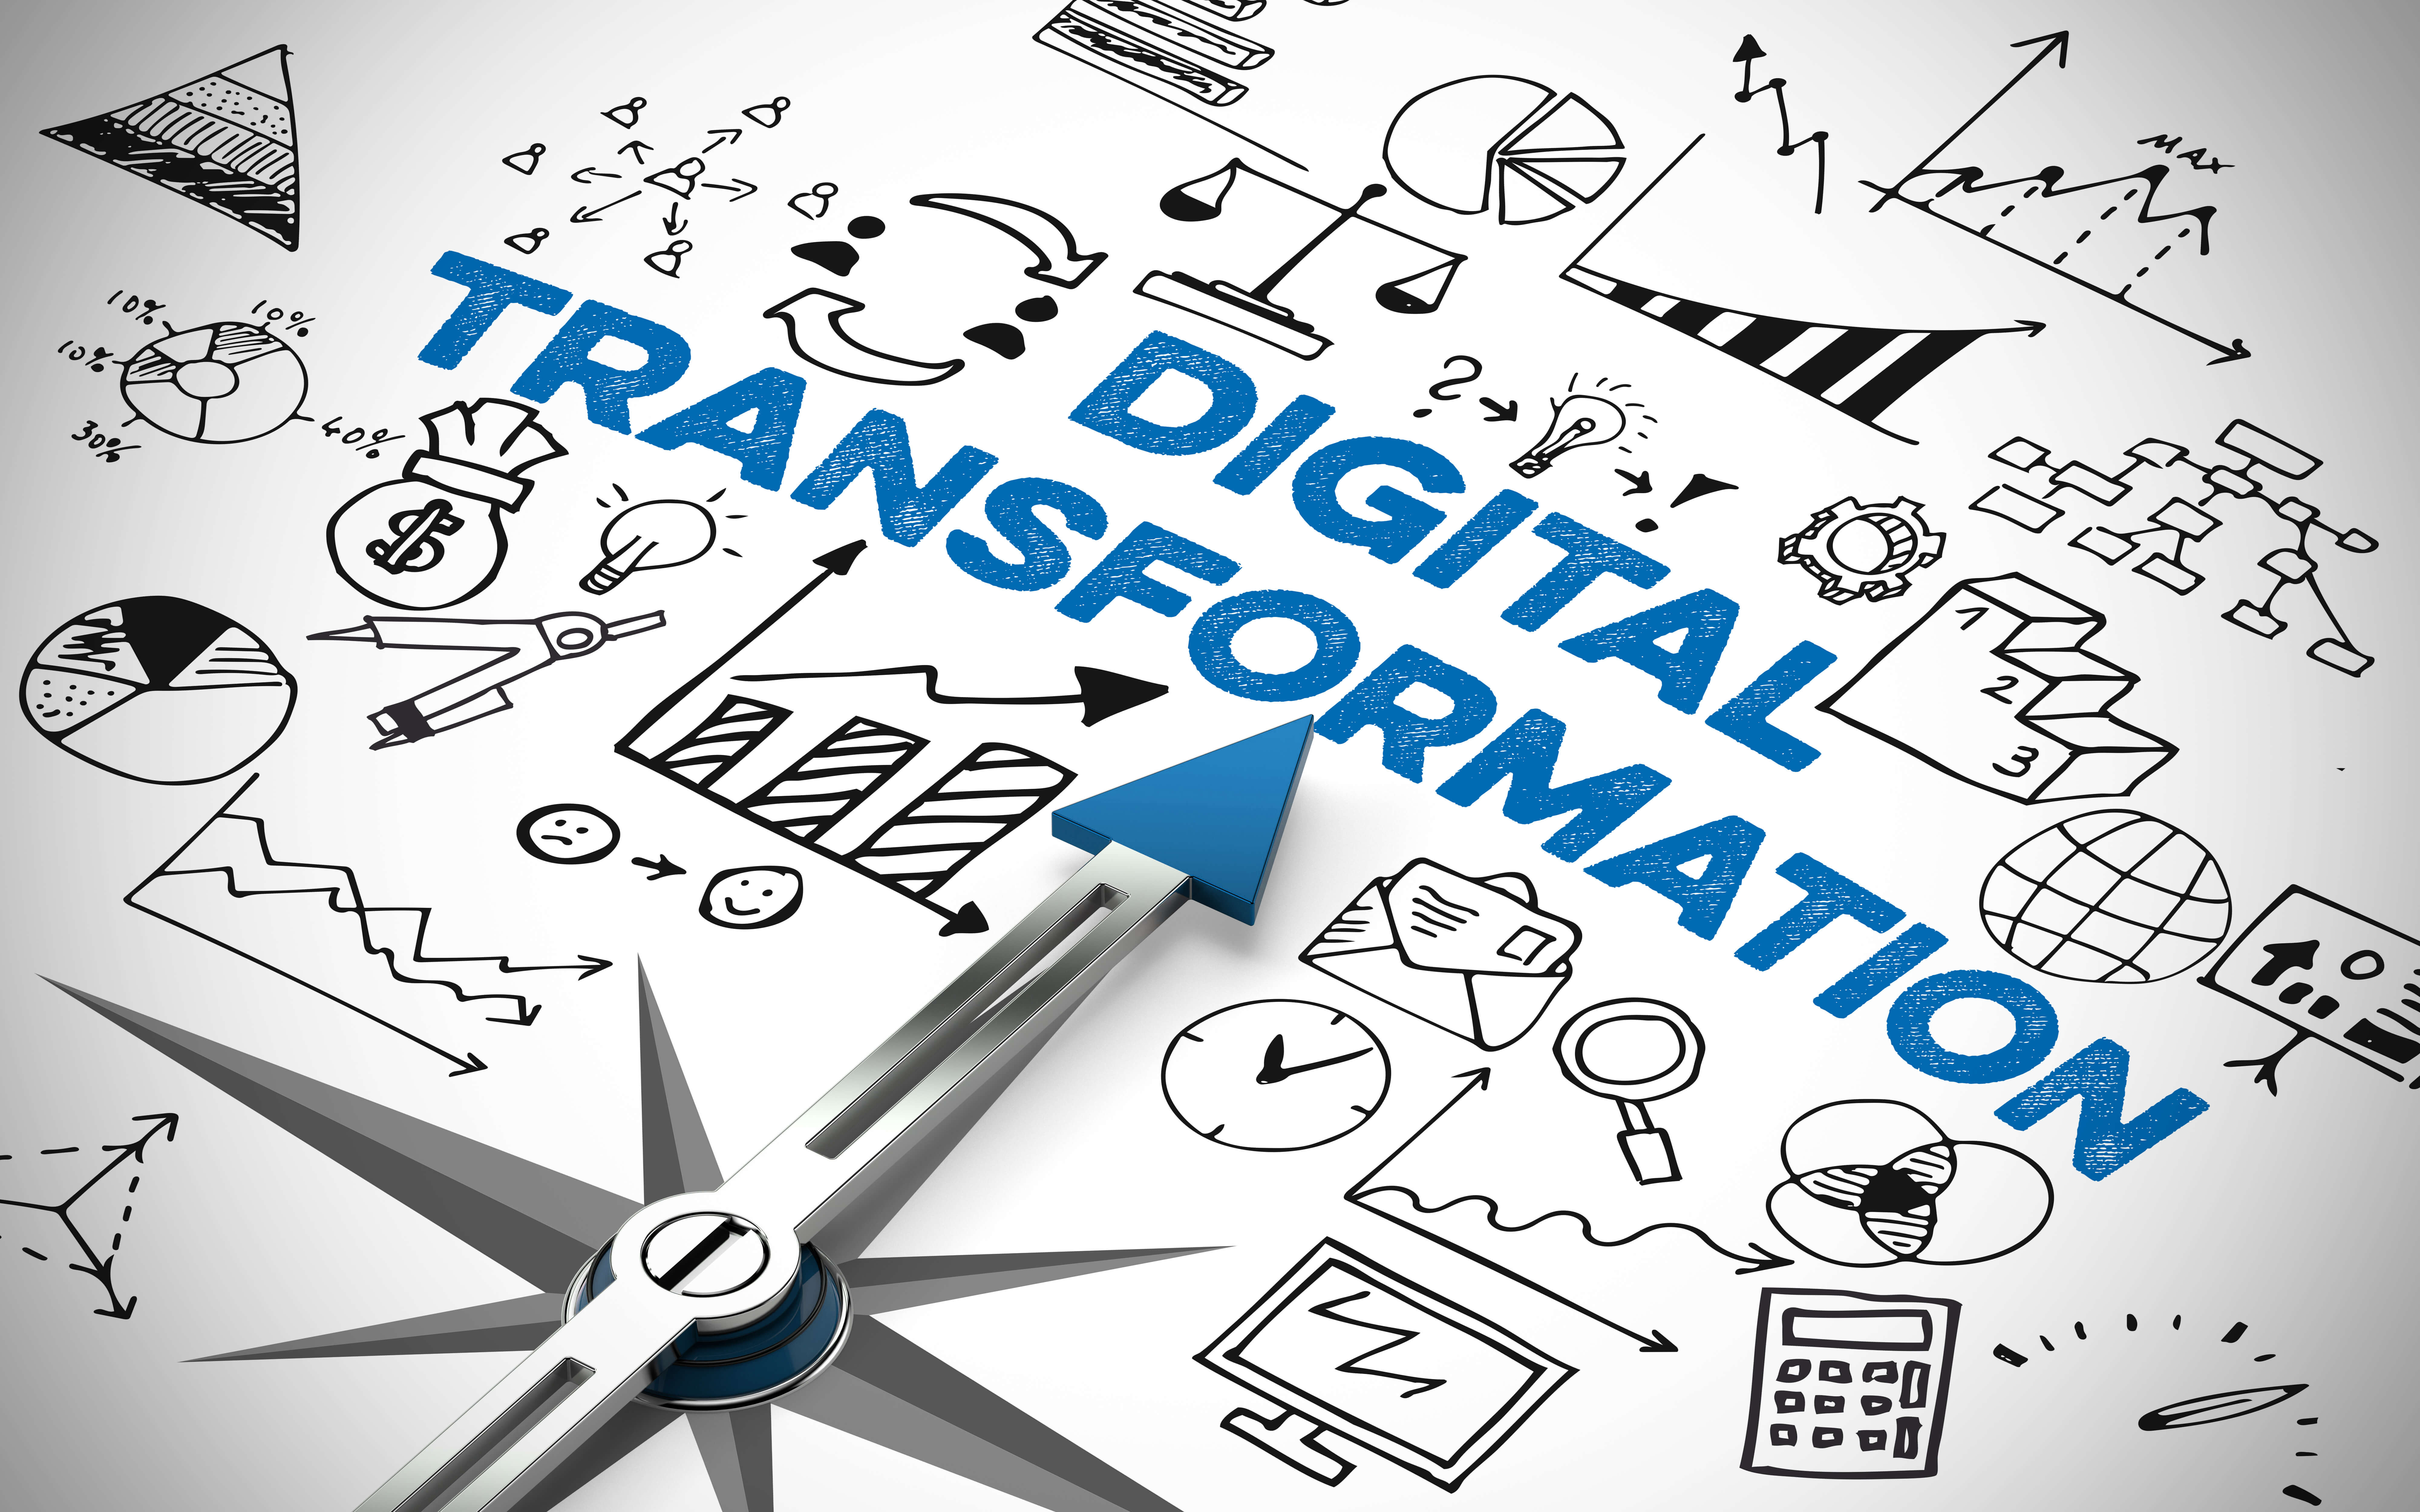 Digital Transformation - Start with a Workshop